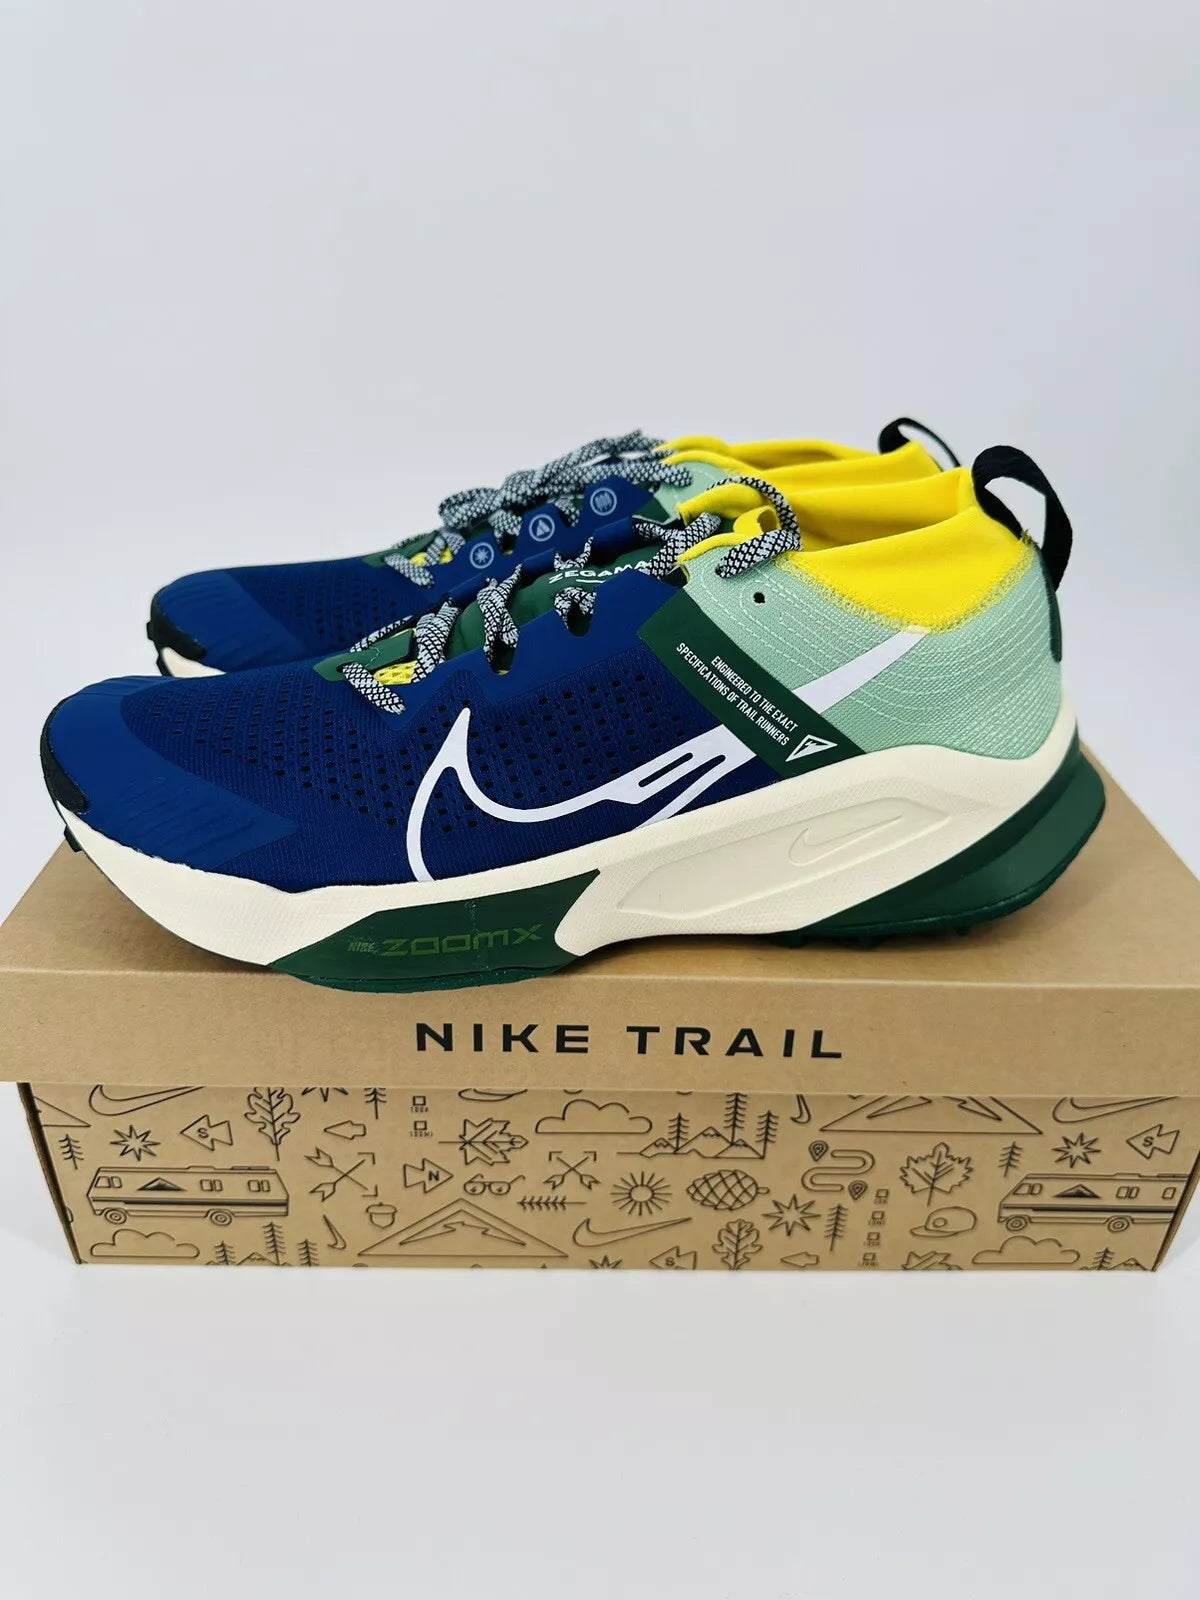 Nike trial